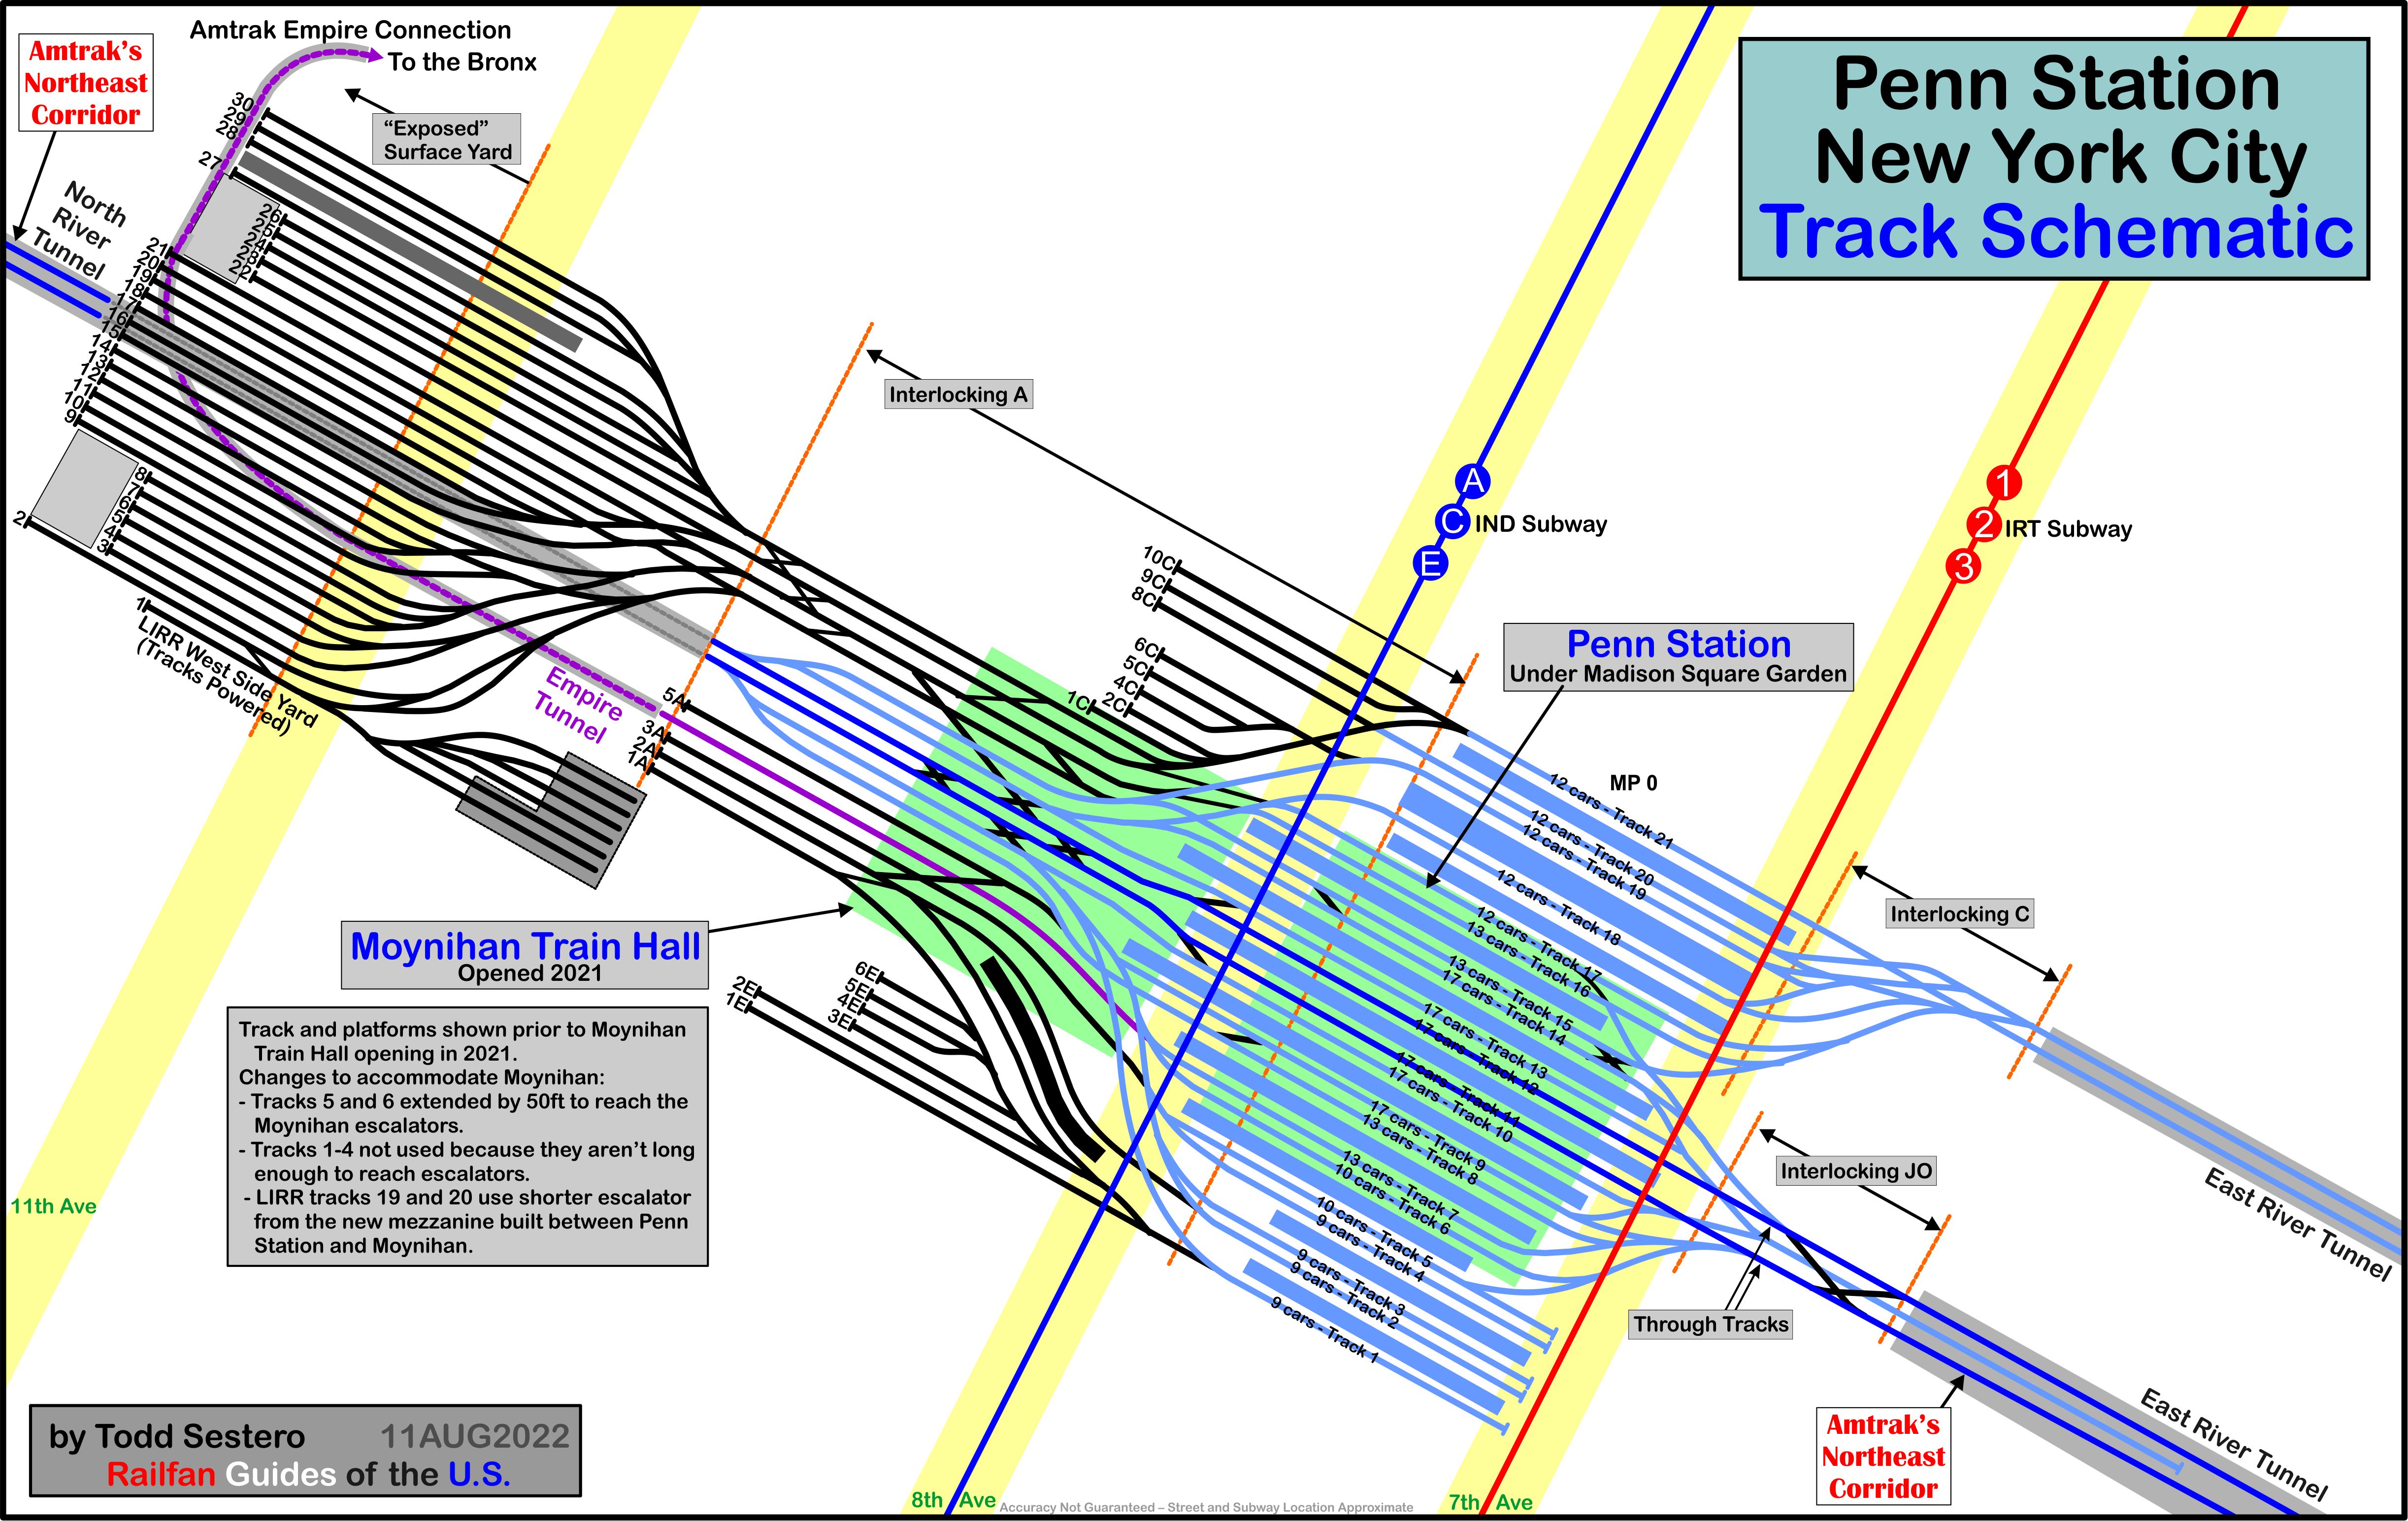 New York Penn Station Map